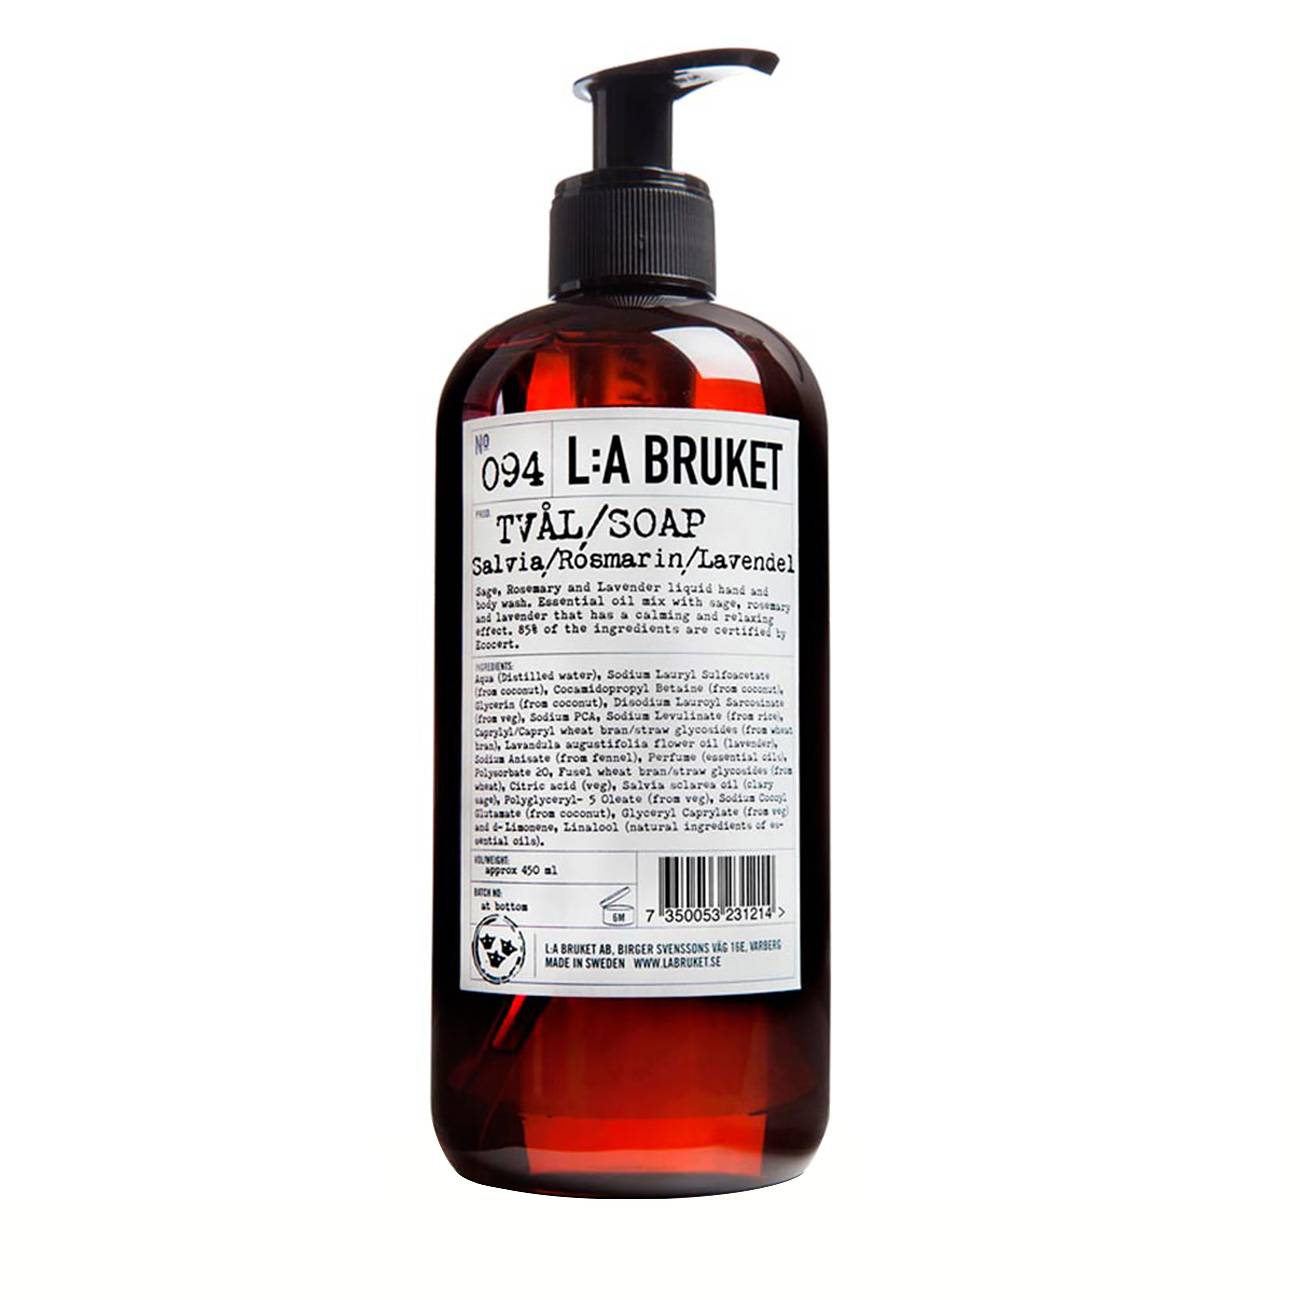 Produs pentru baie L:A BRUKET 094 SOAP SAGE/ROSEMARY/LAVENDER 250ml cu comanda online